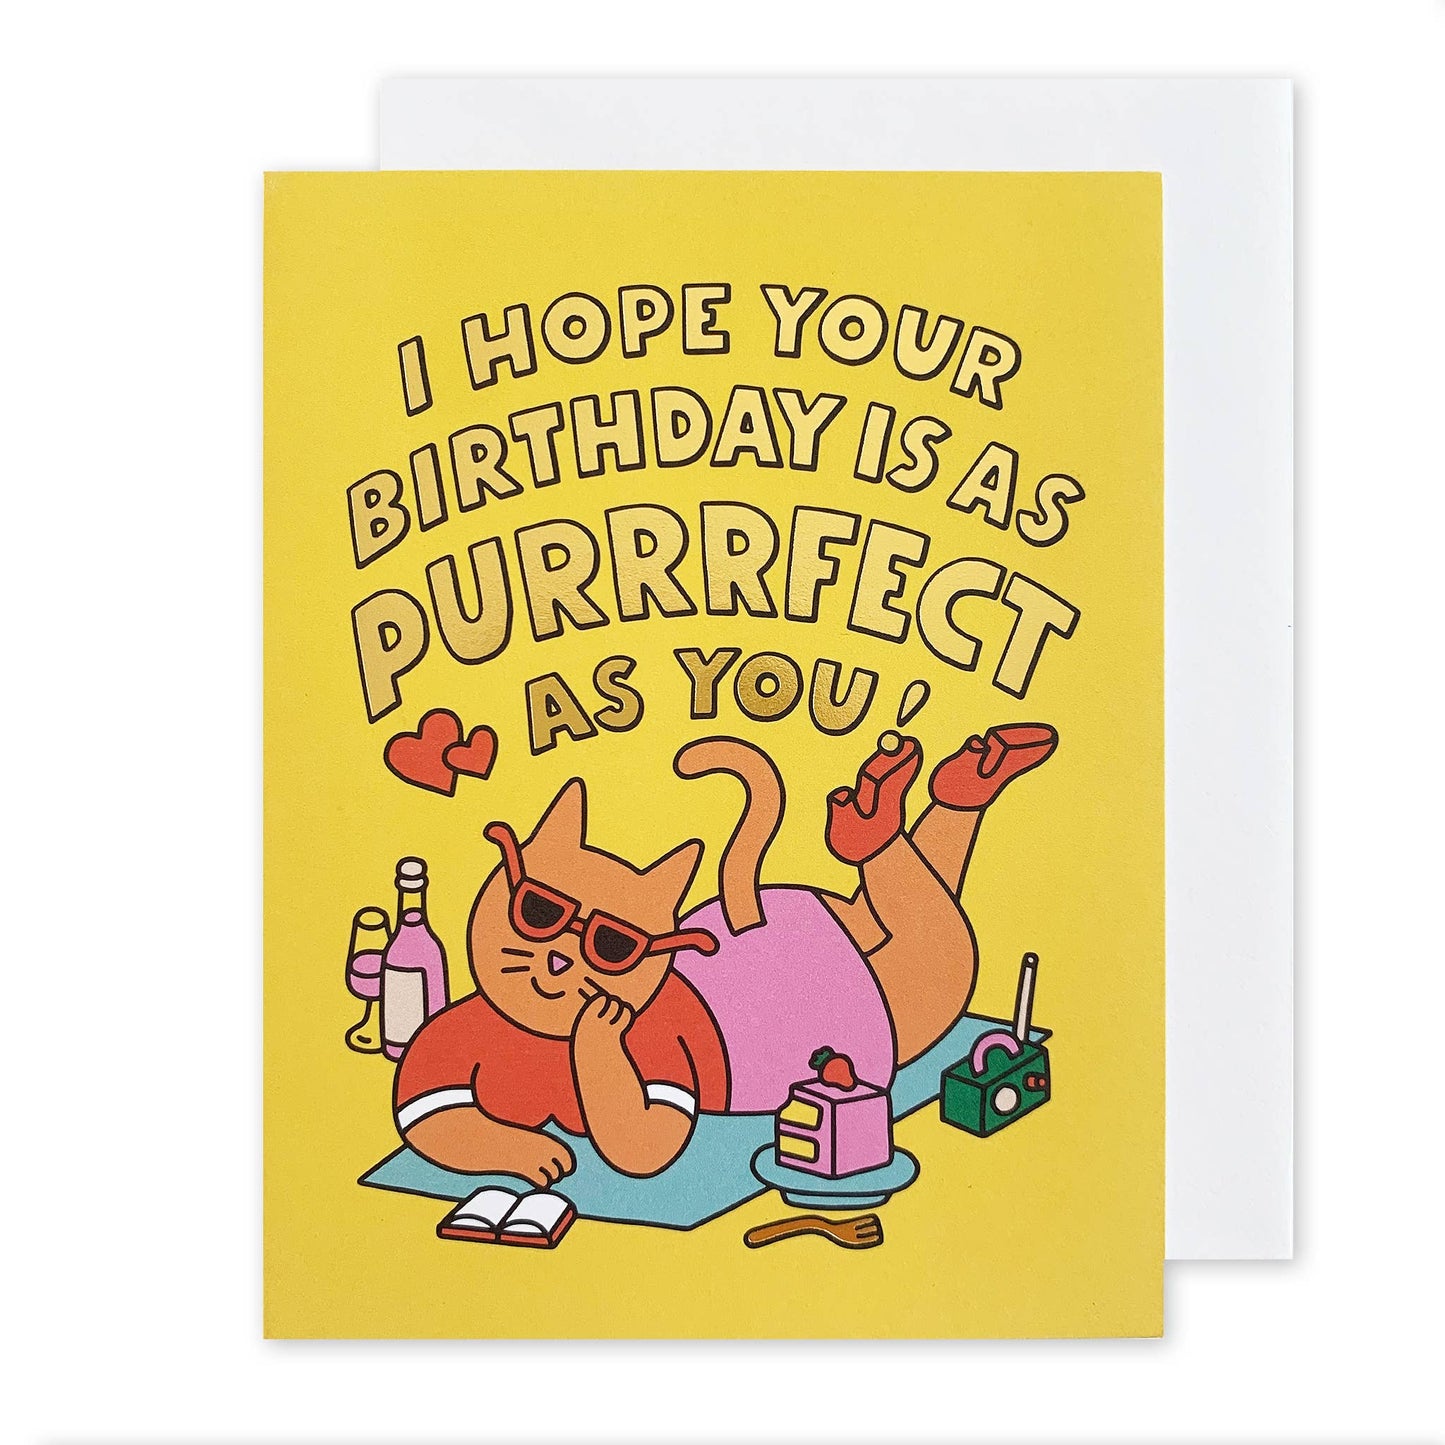 Purrrfect Birthday Card